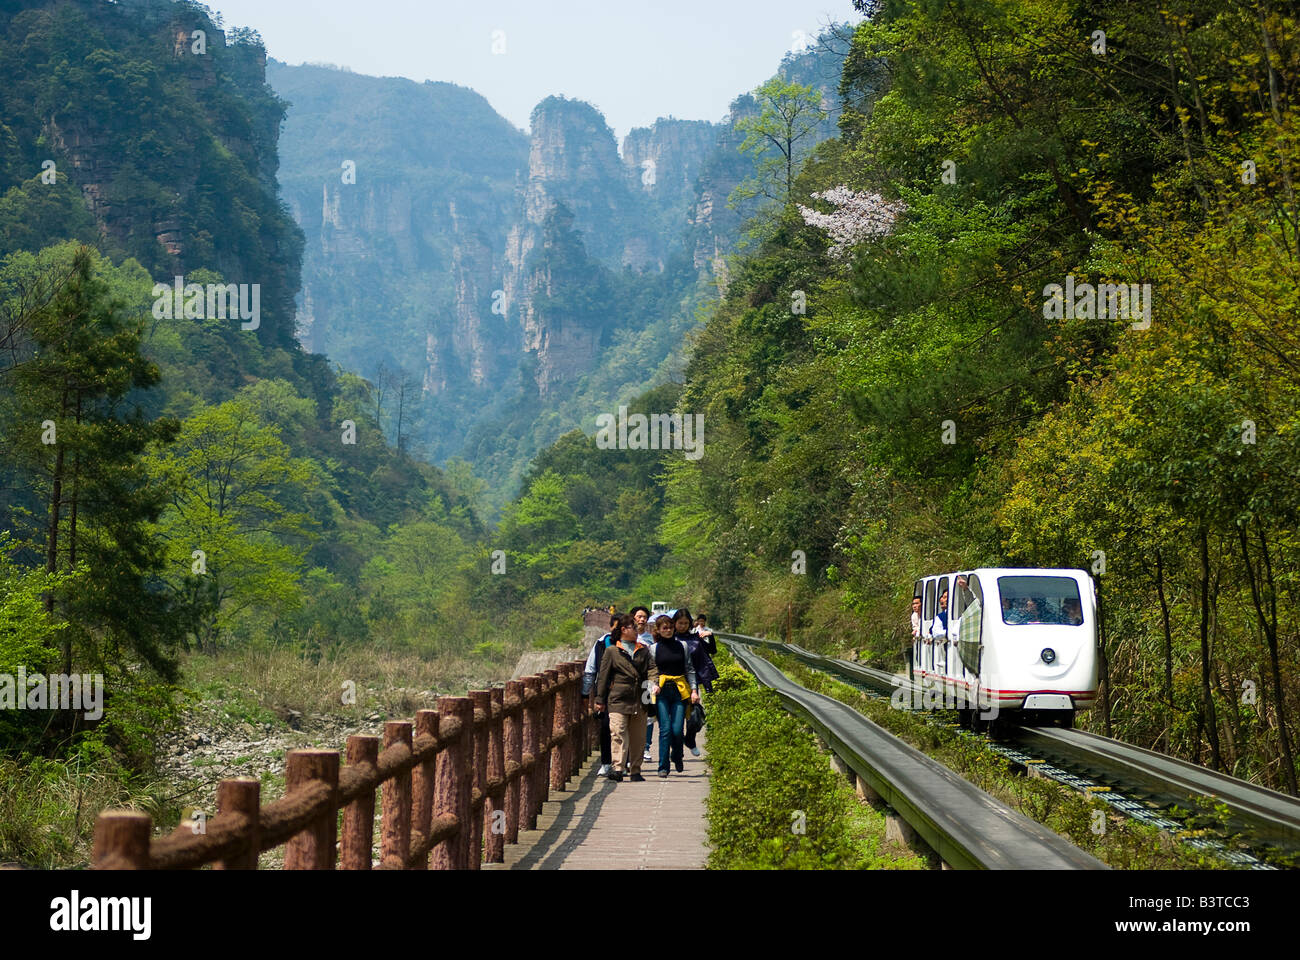 Asia, China, Hunnan Province, Zhangjiajie National Forest Park. Stock Photo